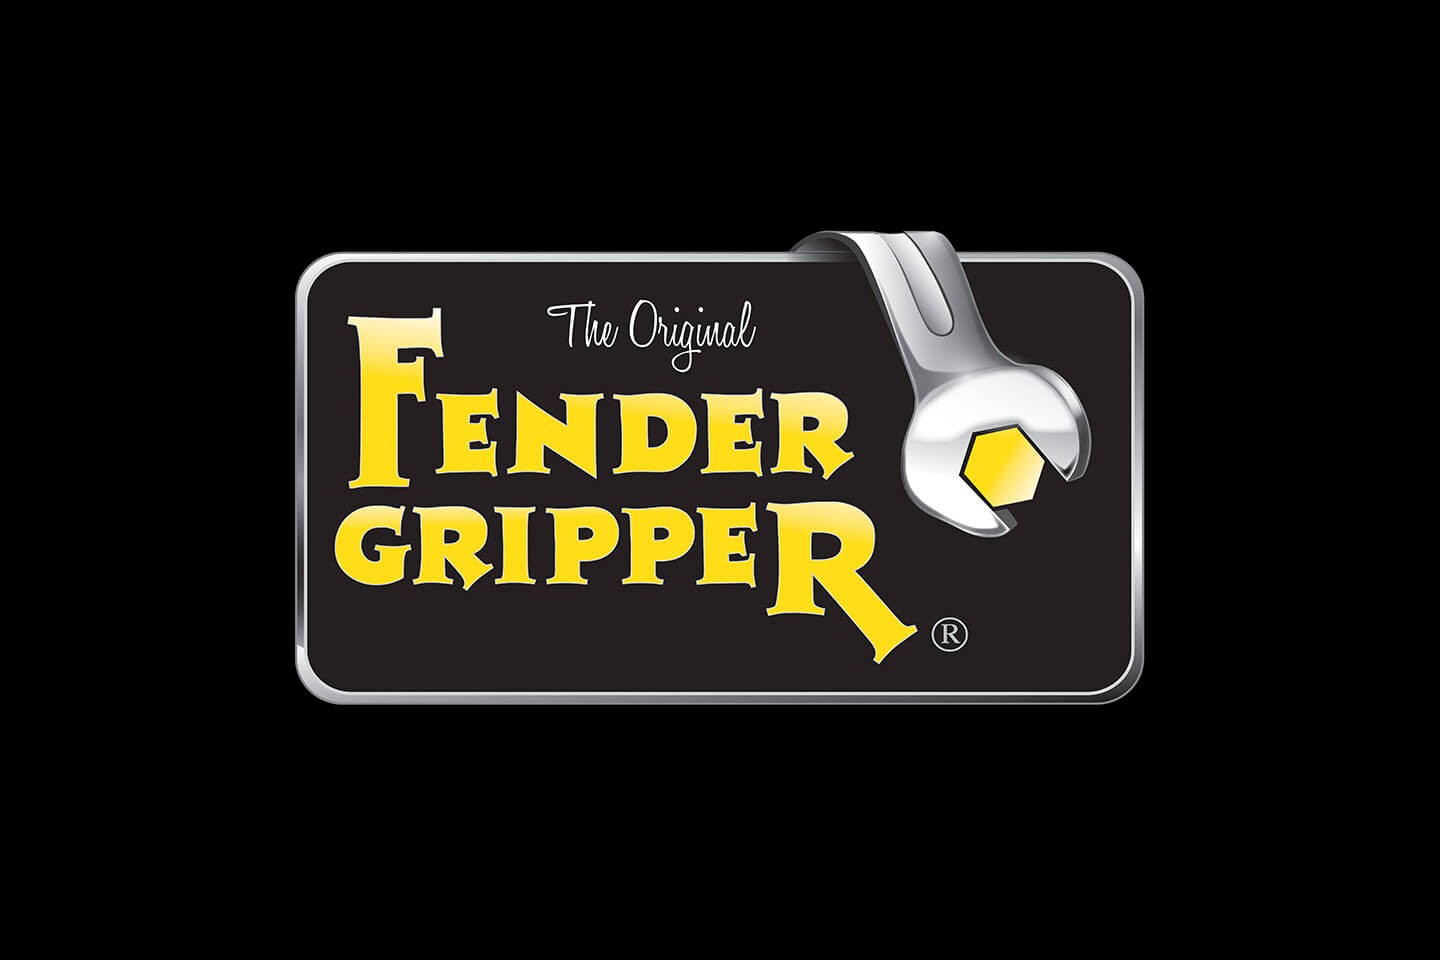 FENDER GRIPPER